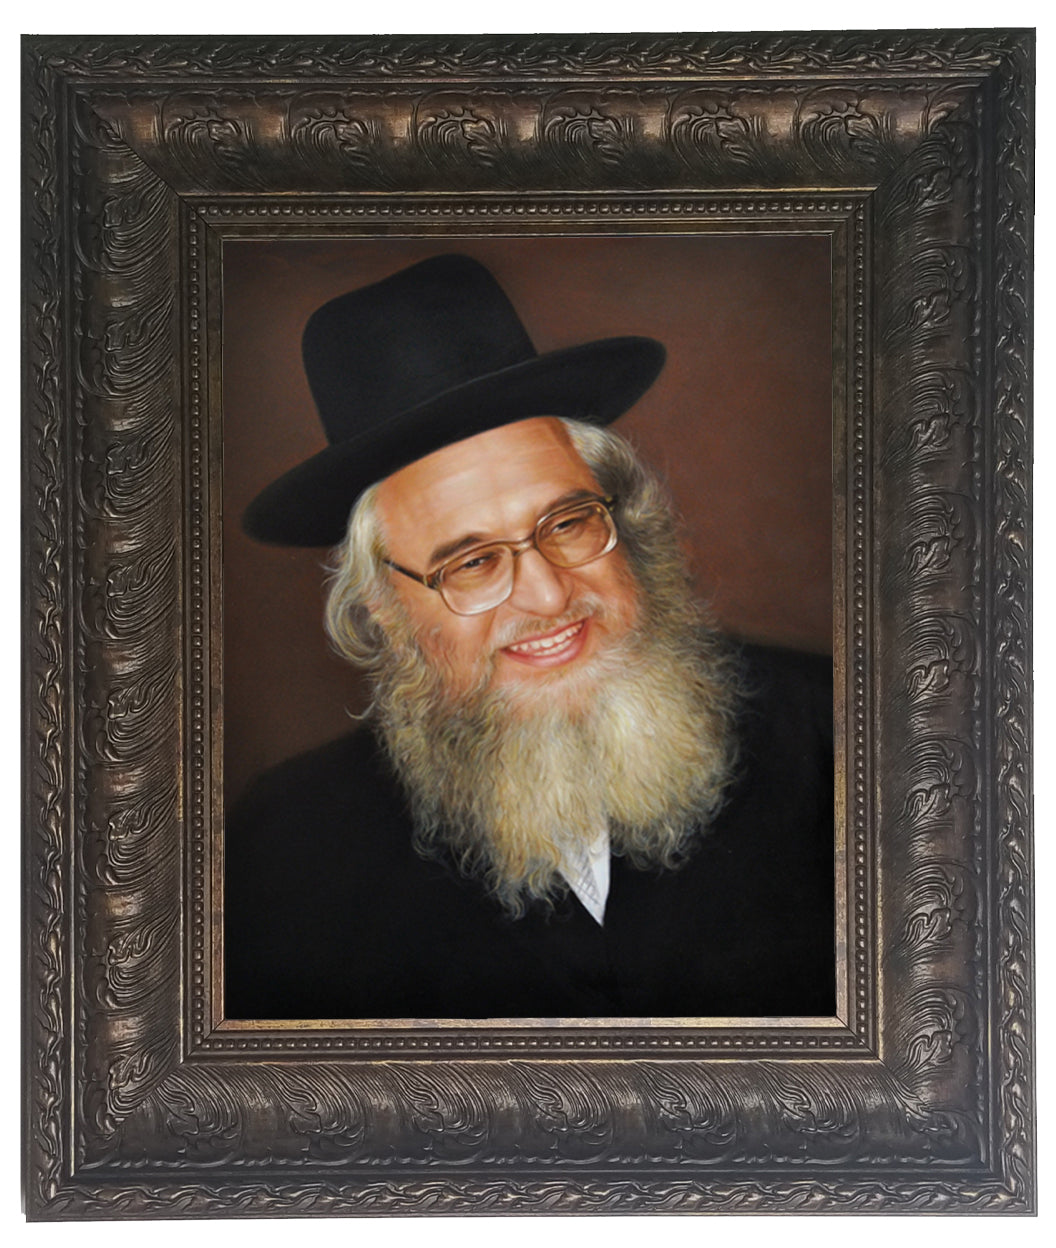 Rabbi Pincus